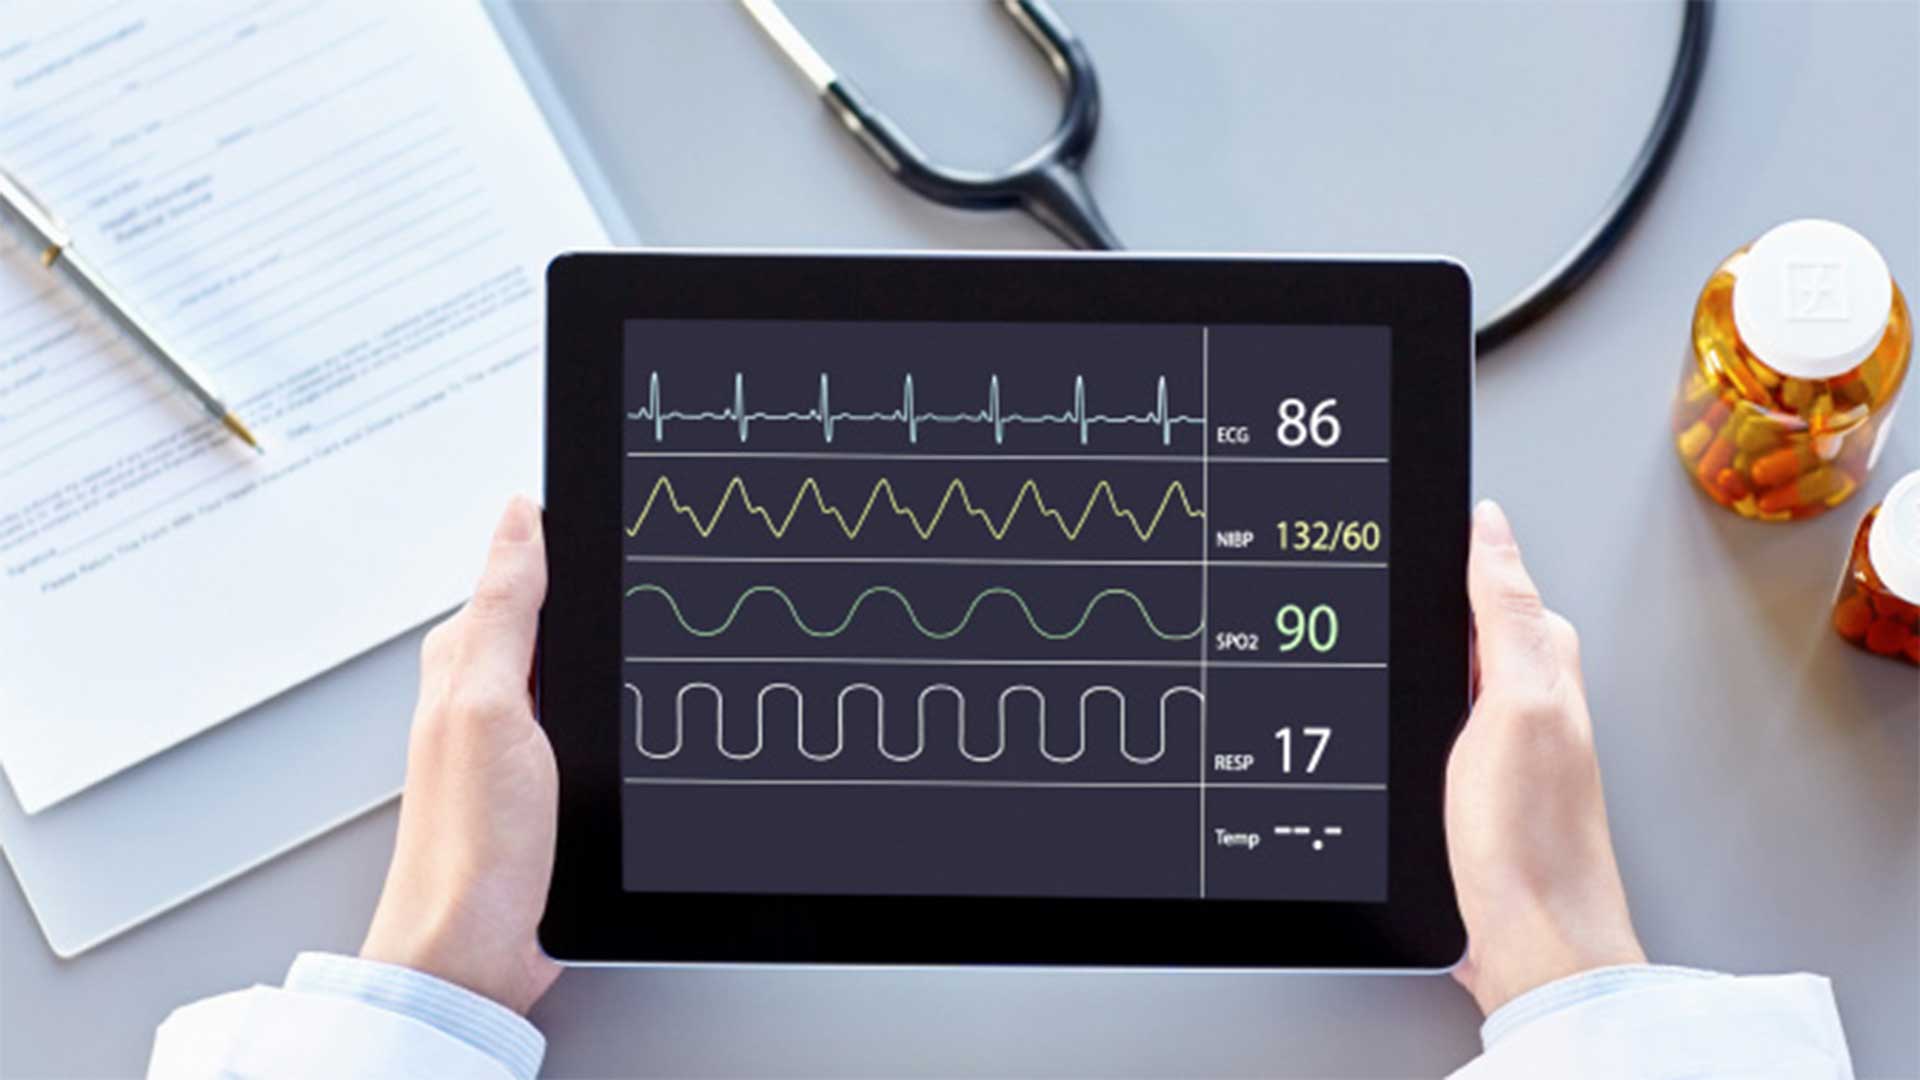 Blood Pressure information displayed on an iPad